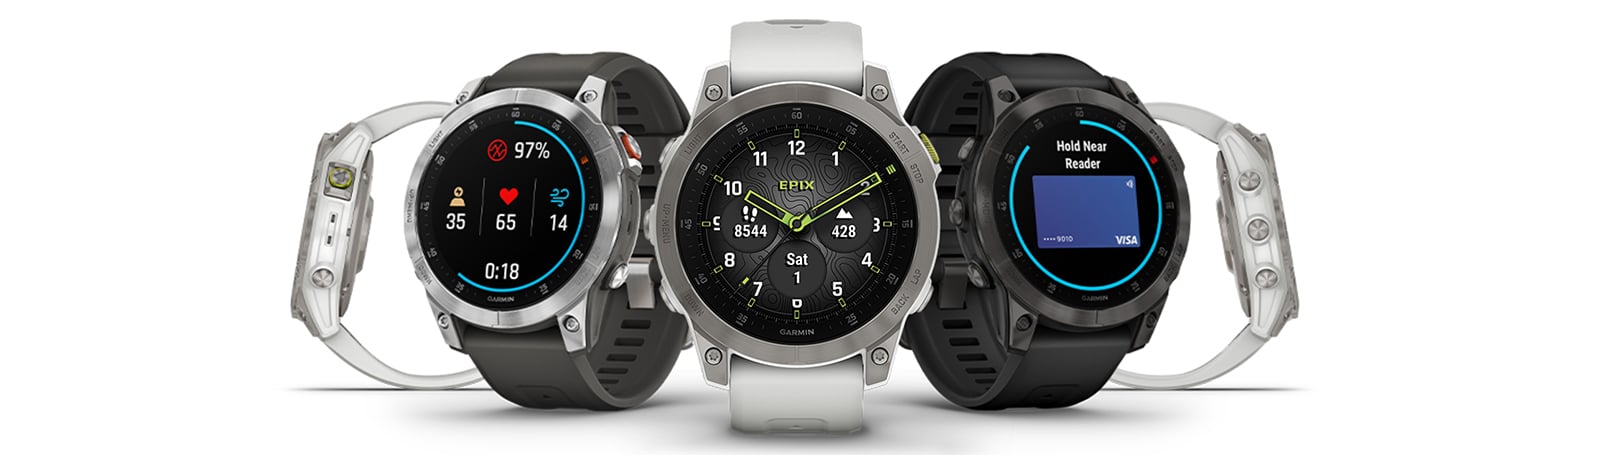 Garmin epix, nuevo reloj inteligente multideporte premium con ultra batería